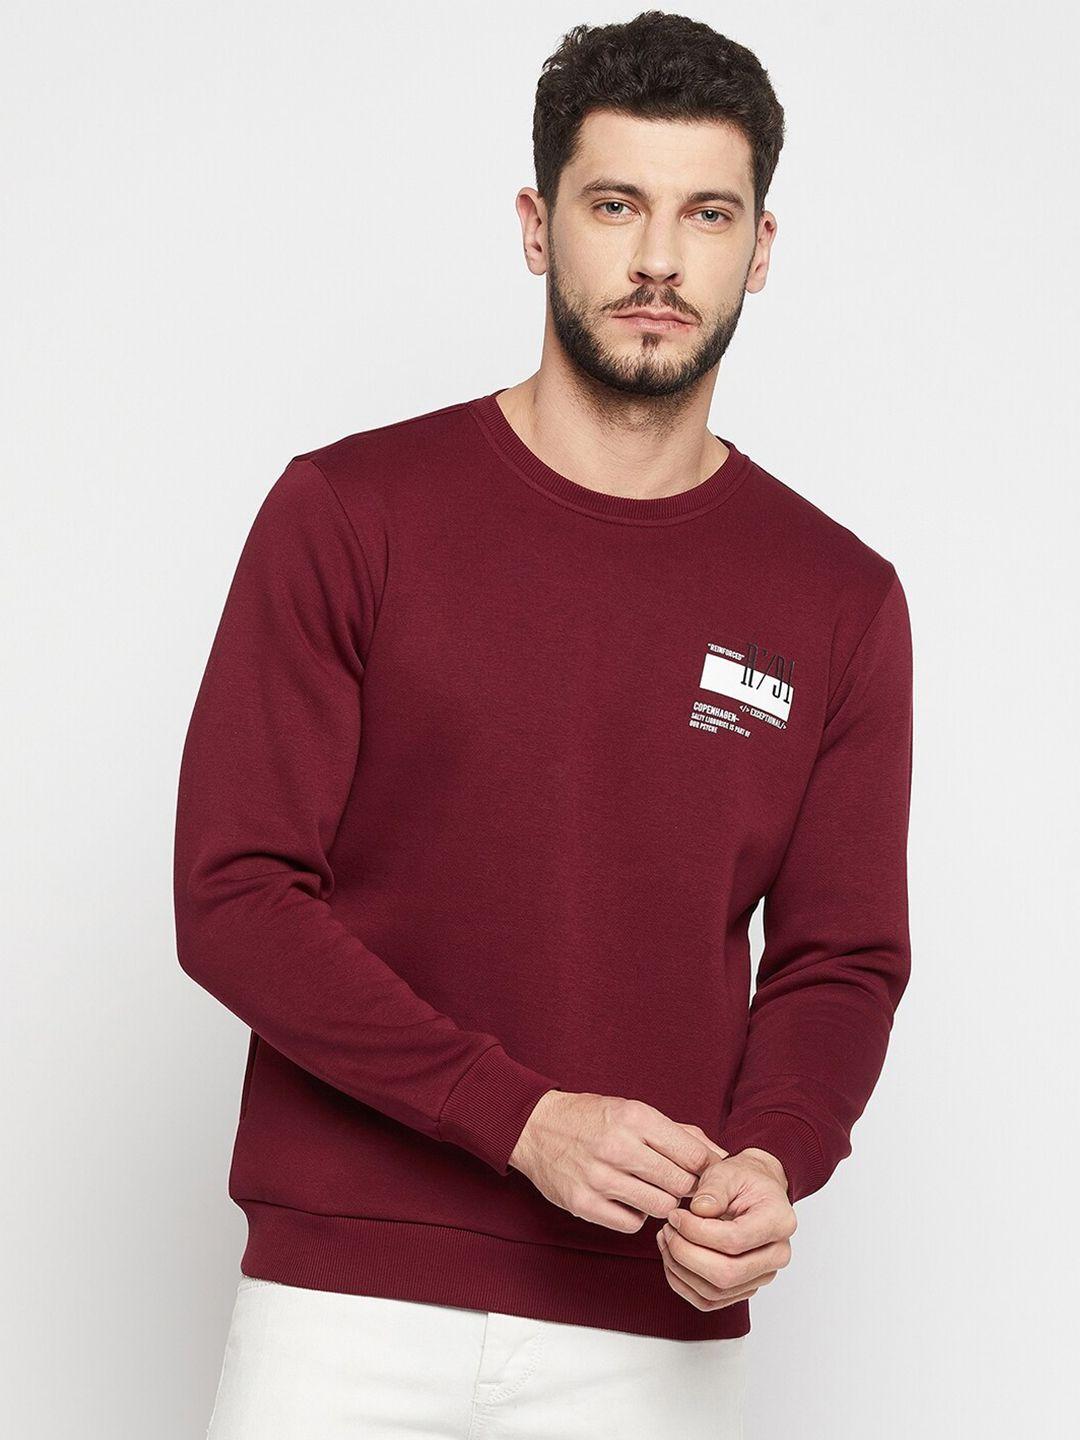 qubic-men-maroon-cotton-sweatshirt